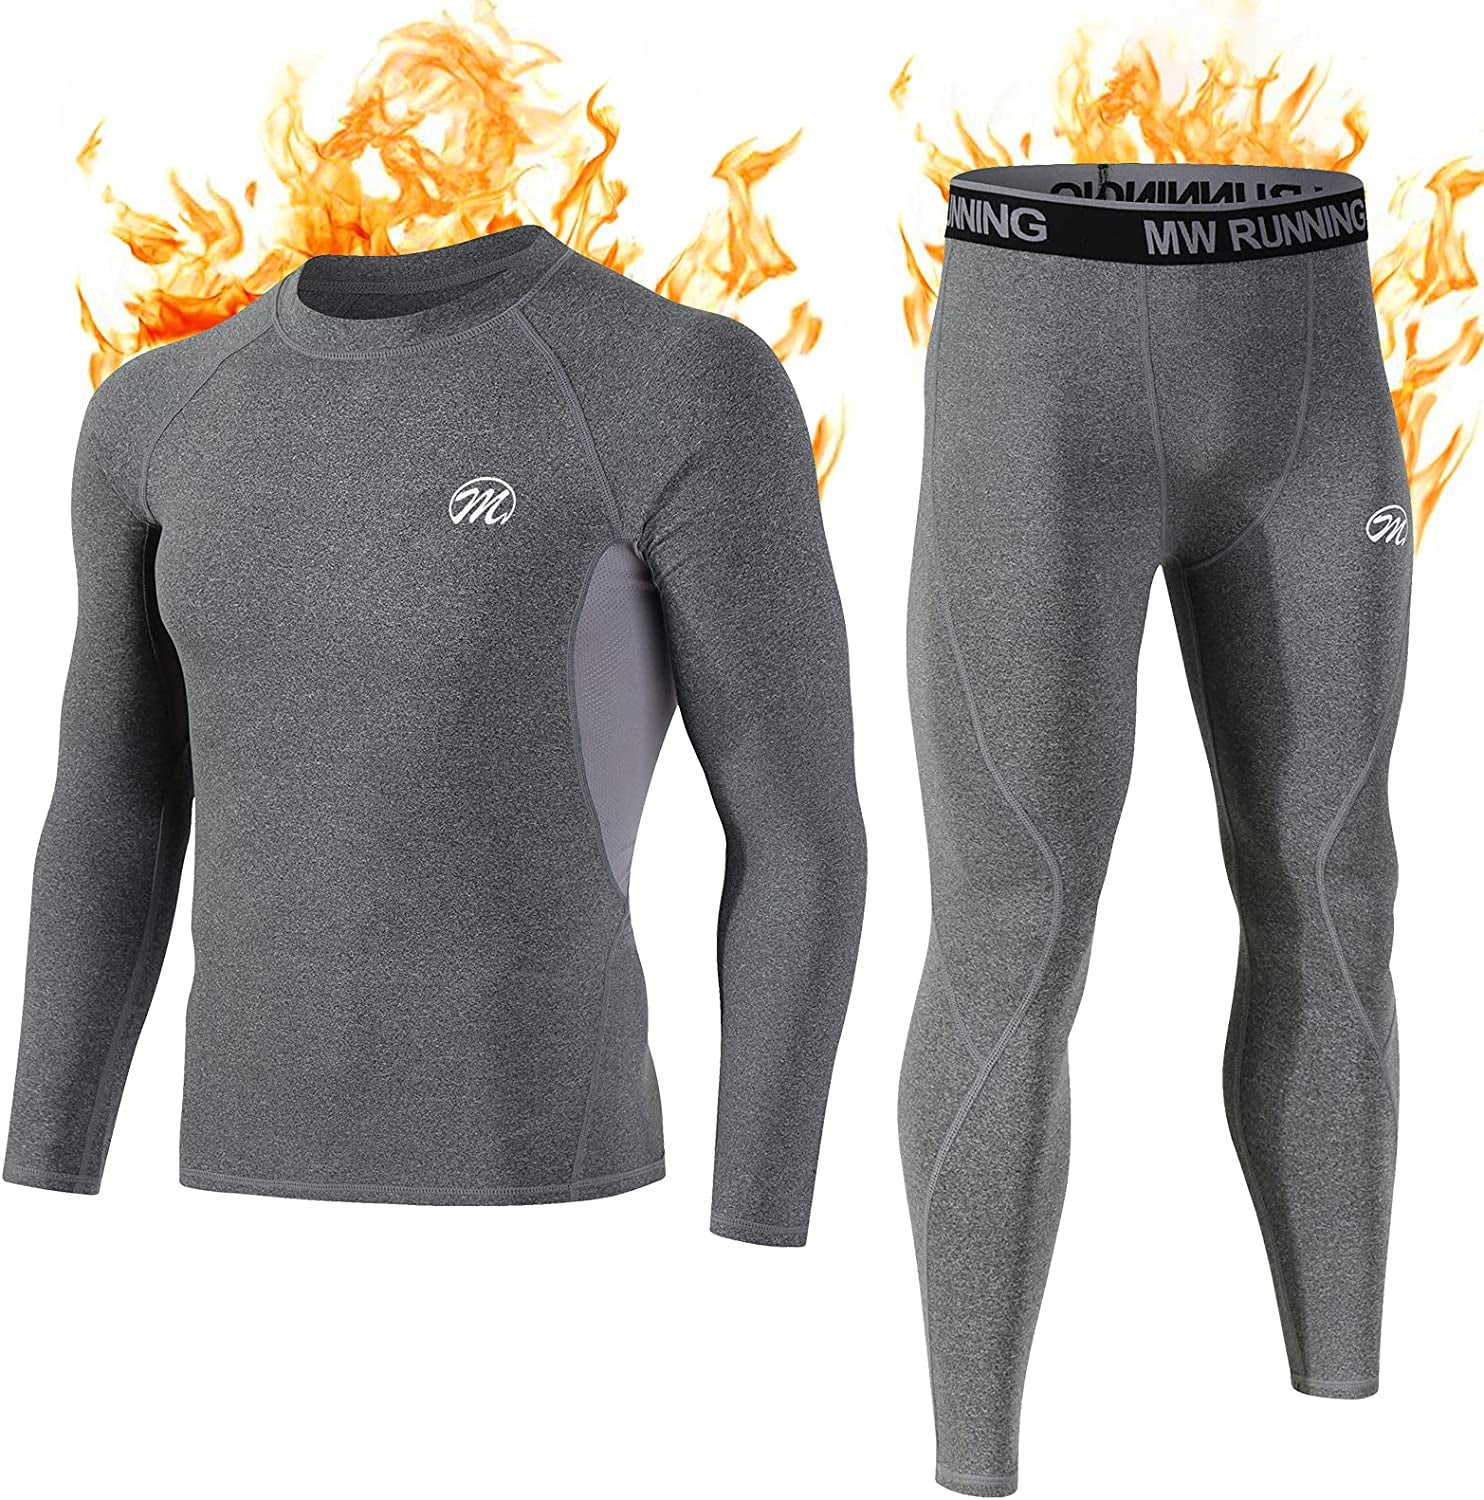 Thermal Underwear legging for Men, Ski Cold Weather Gear for Heat Retention